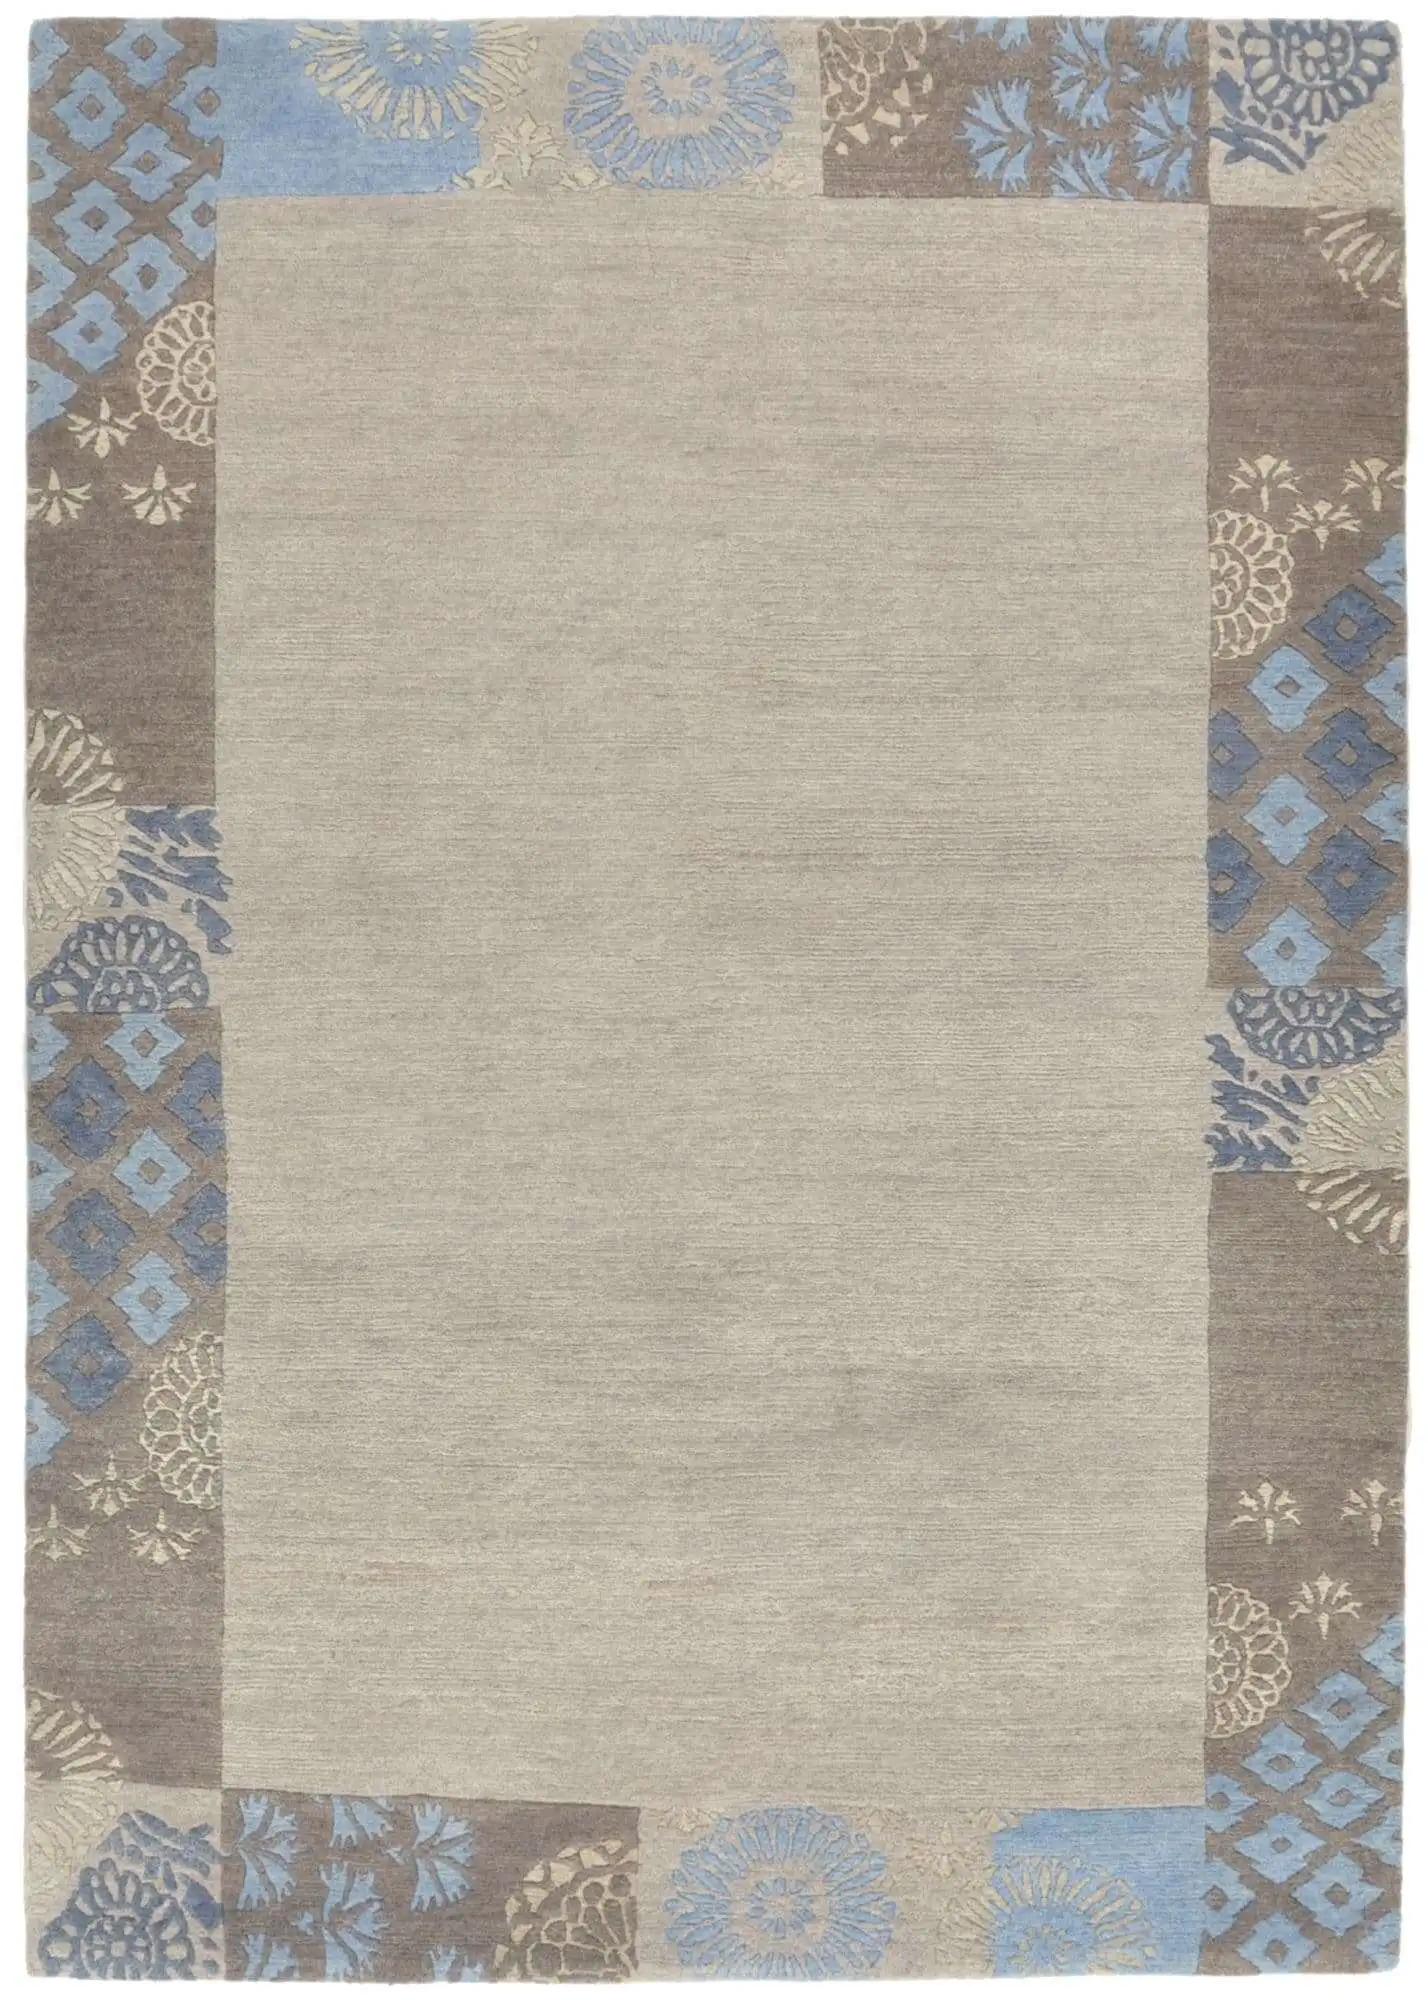 Talonga Silk Nepal Teppich RSK495-X1040 im Wunschmaß